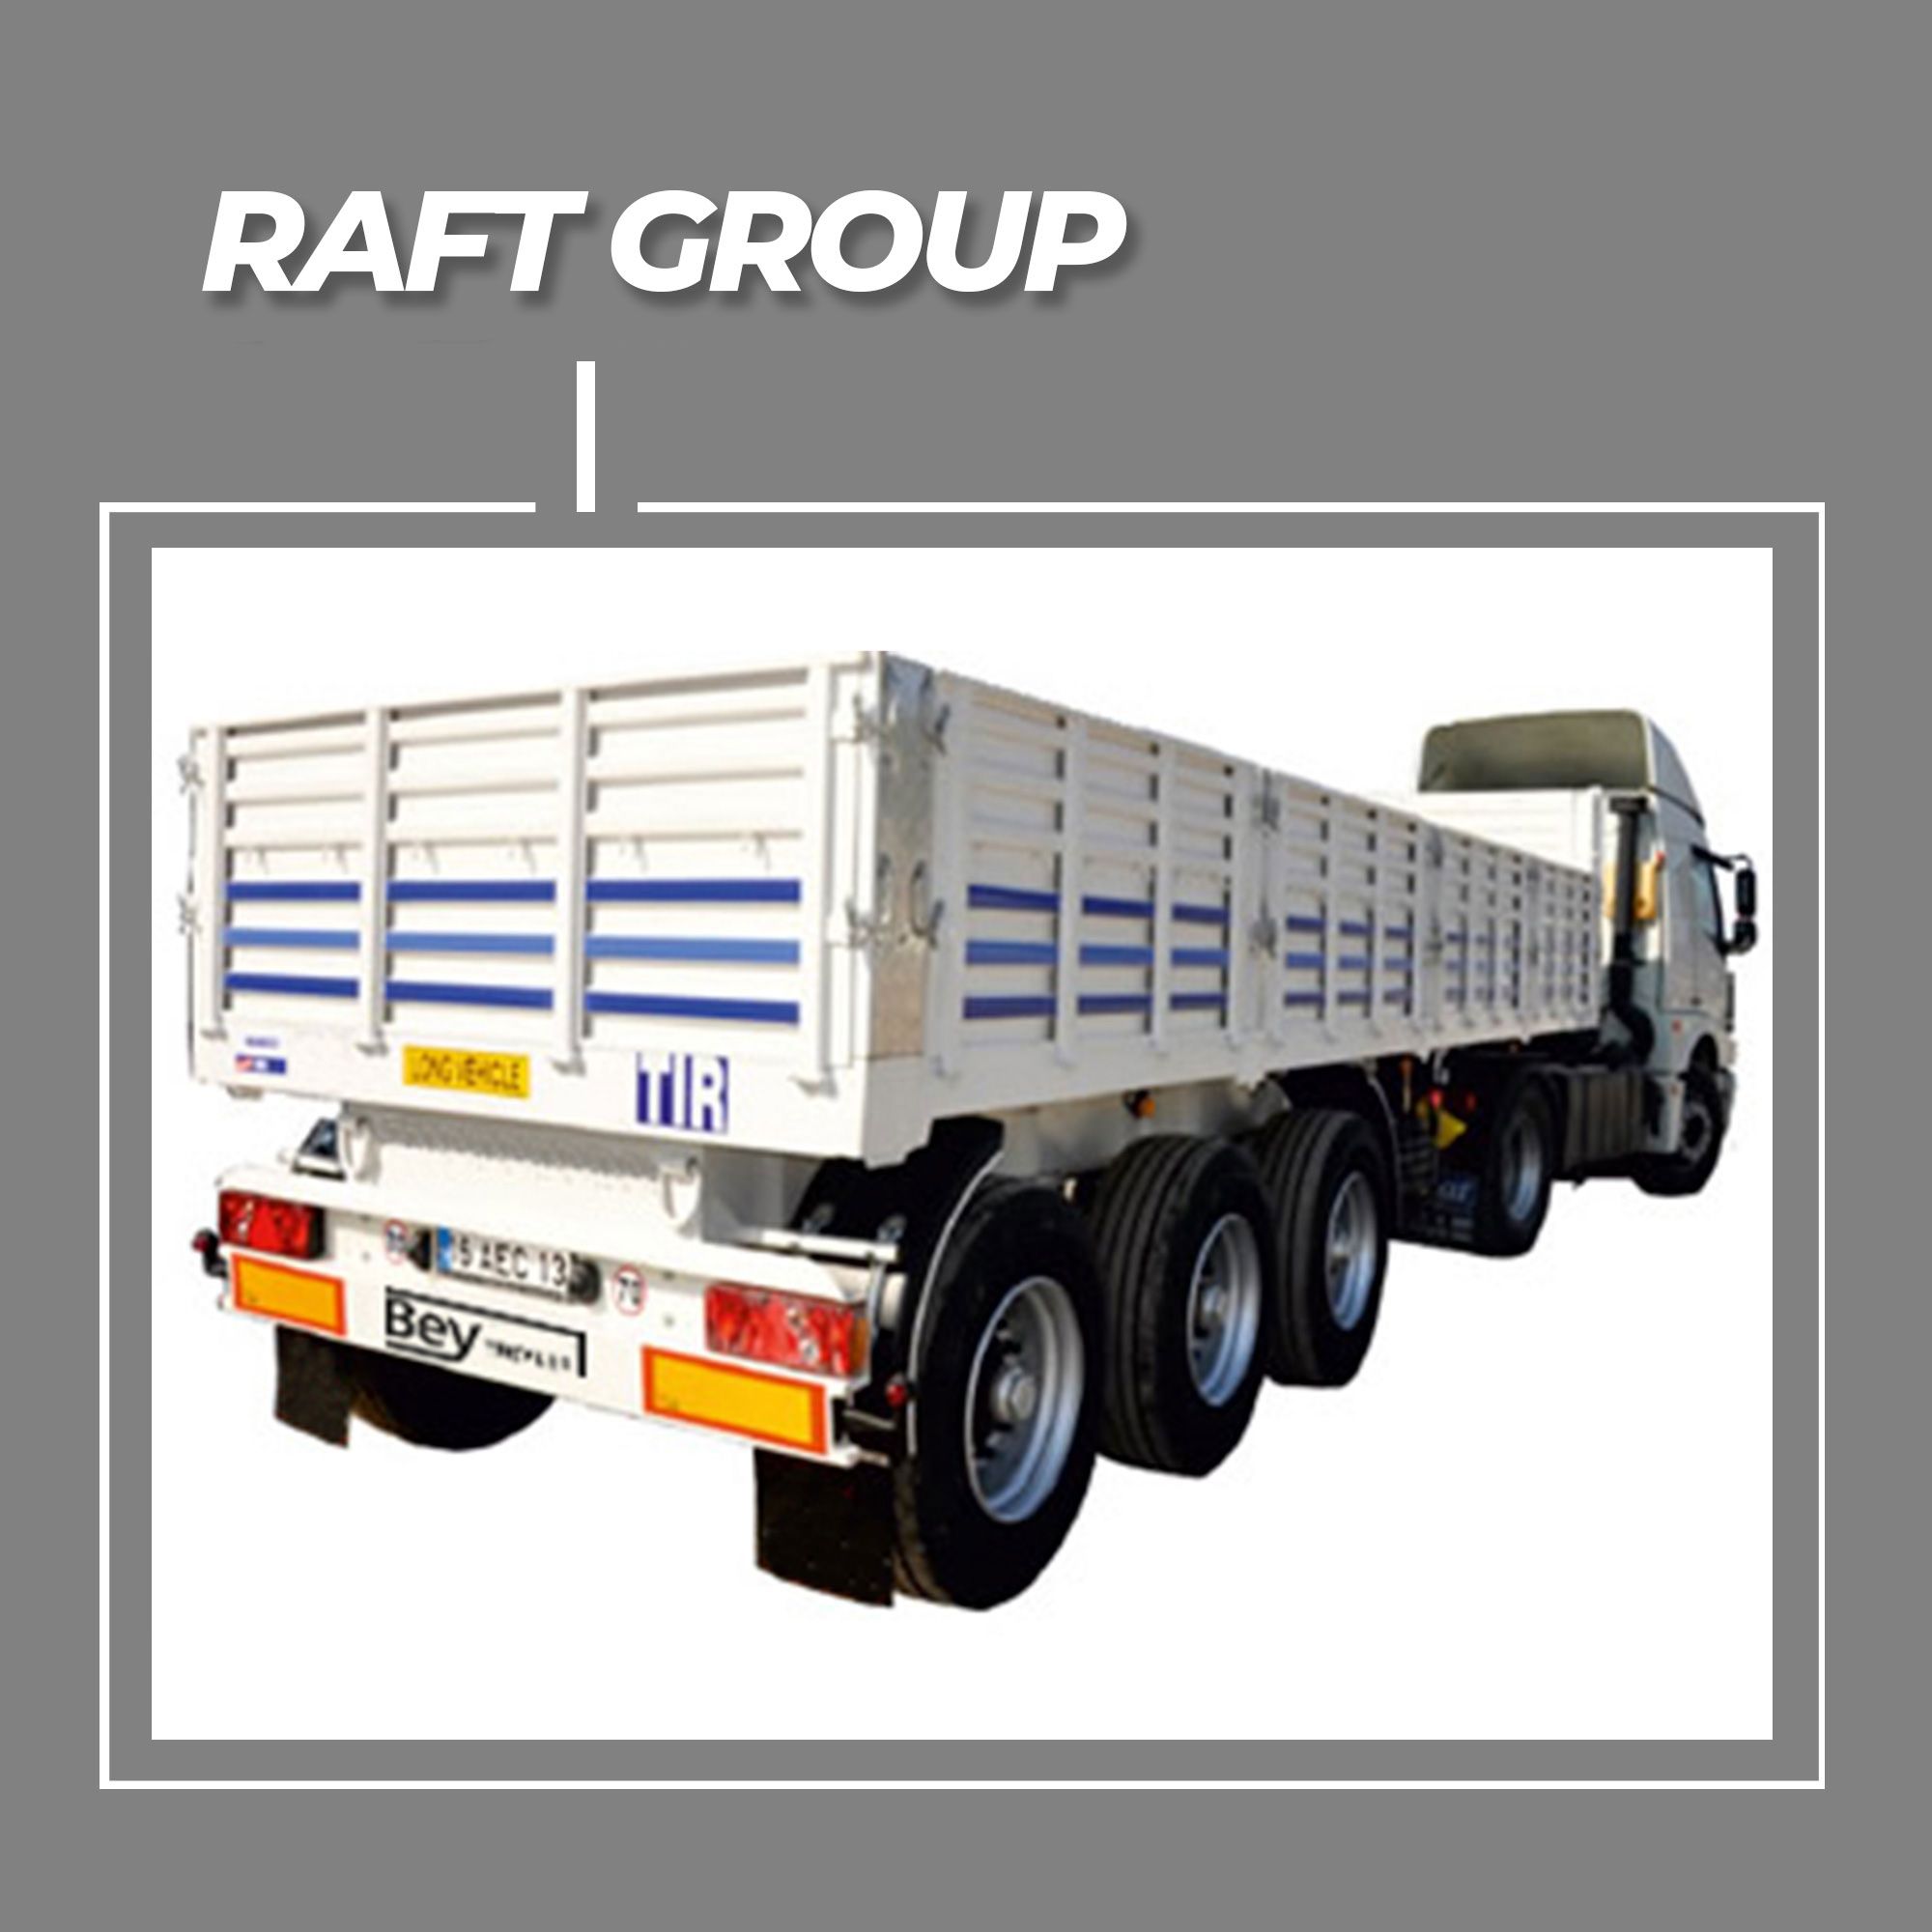 Raft Group